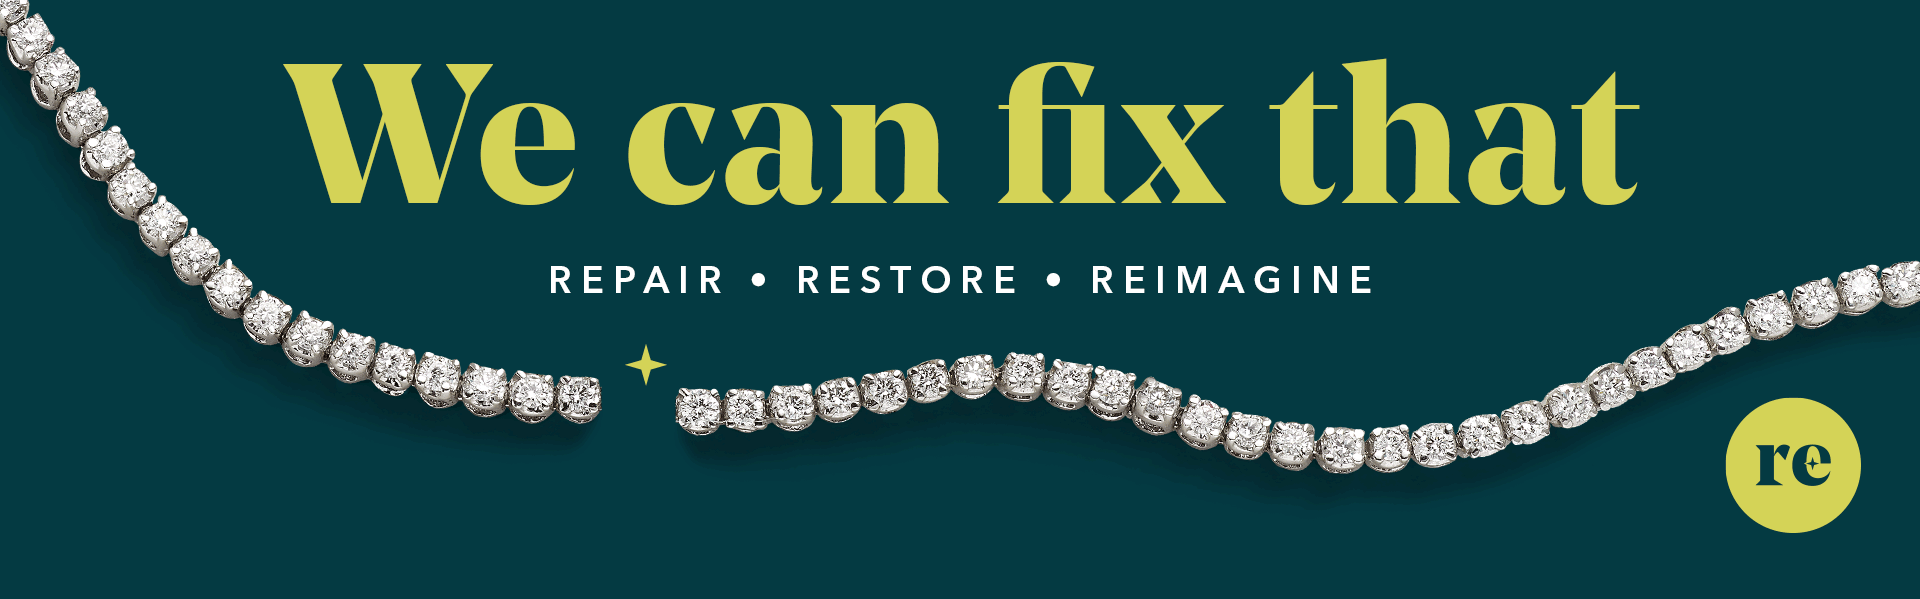 We can fix that. Repair, Restore, Reimagine. Learn More